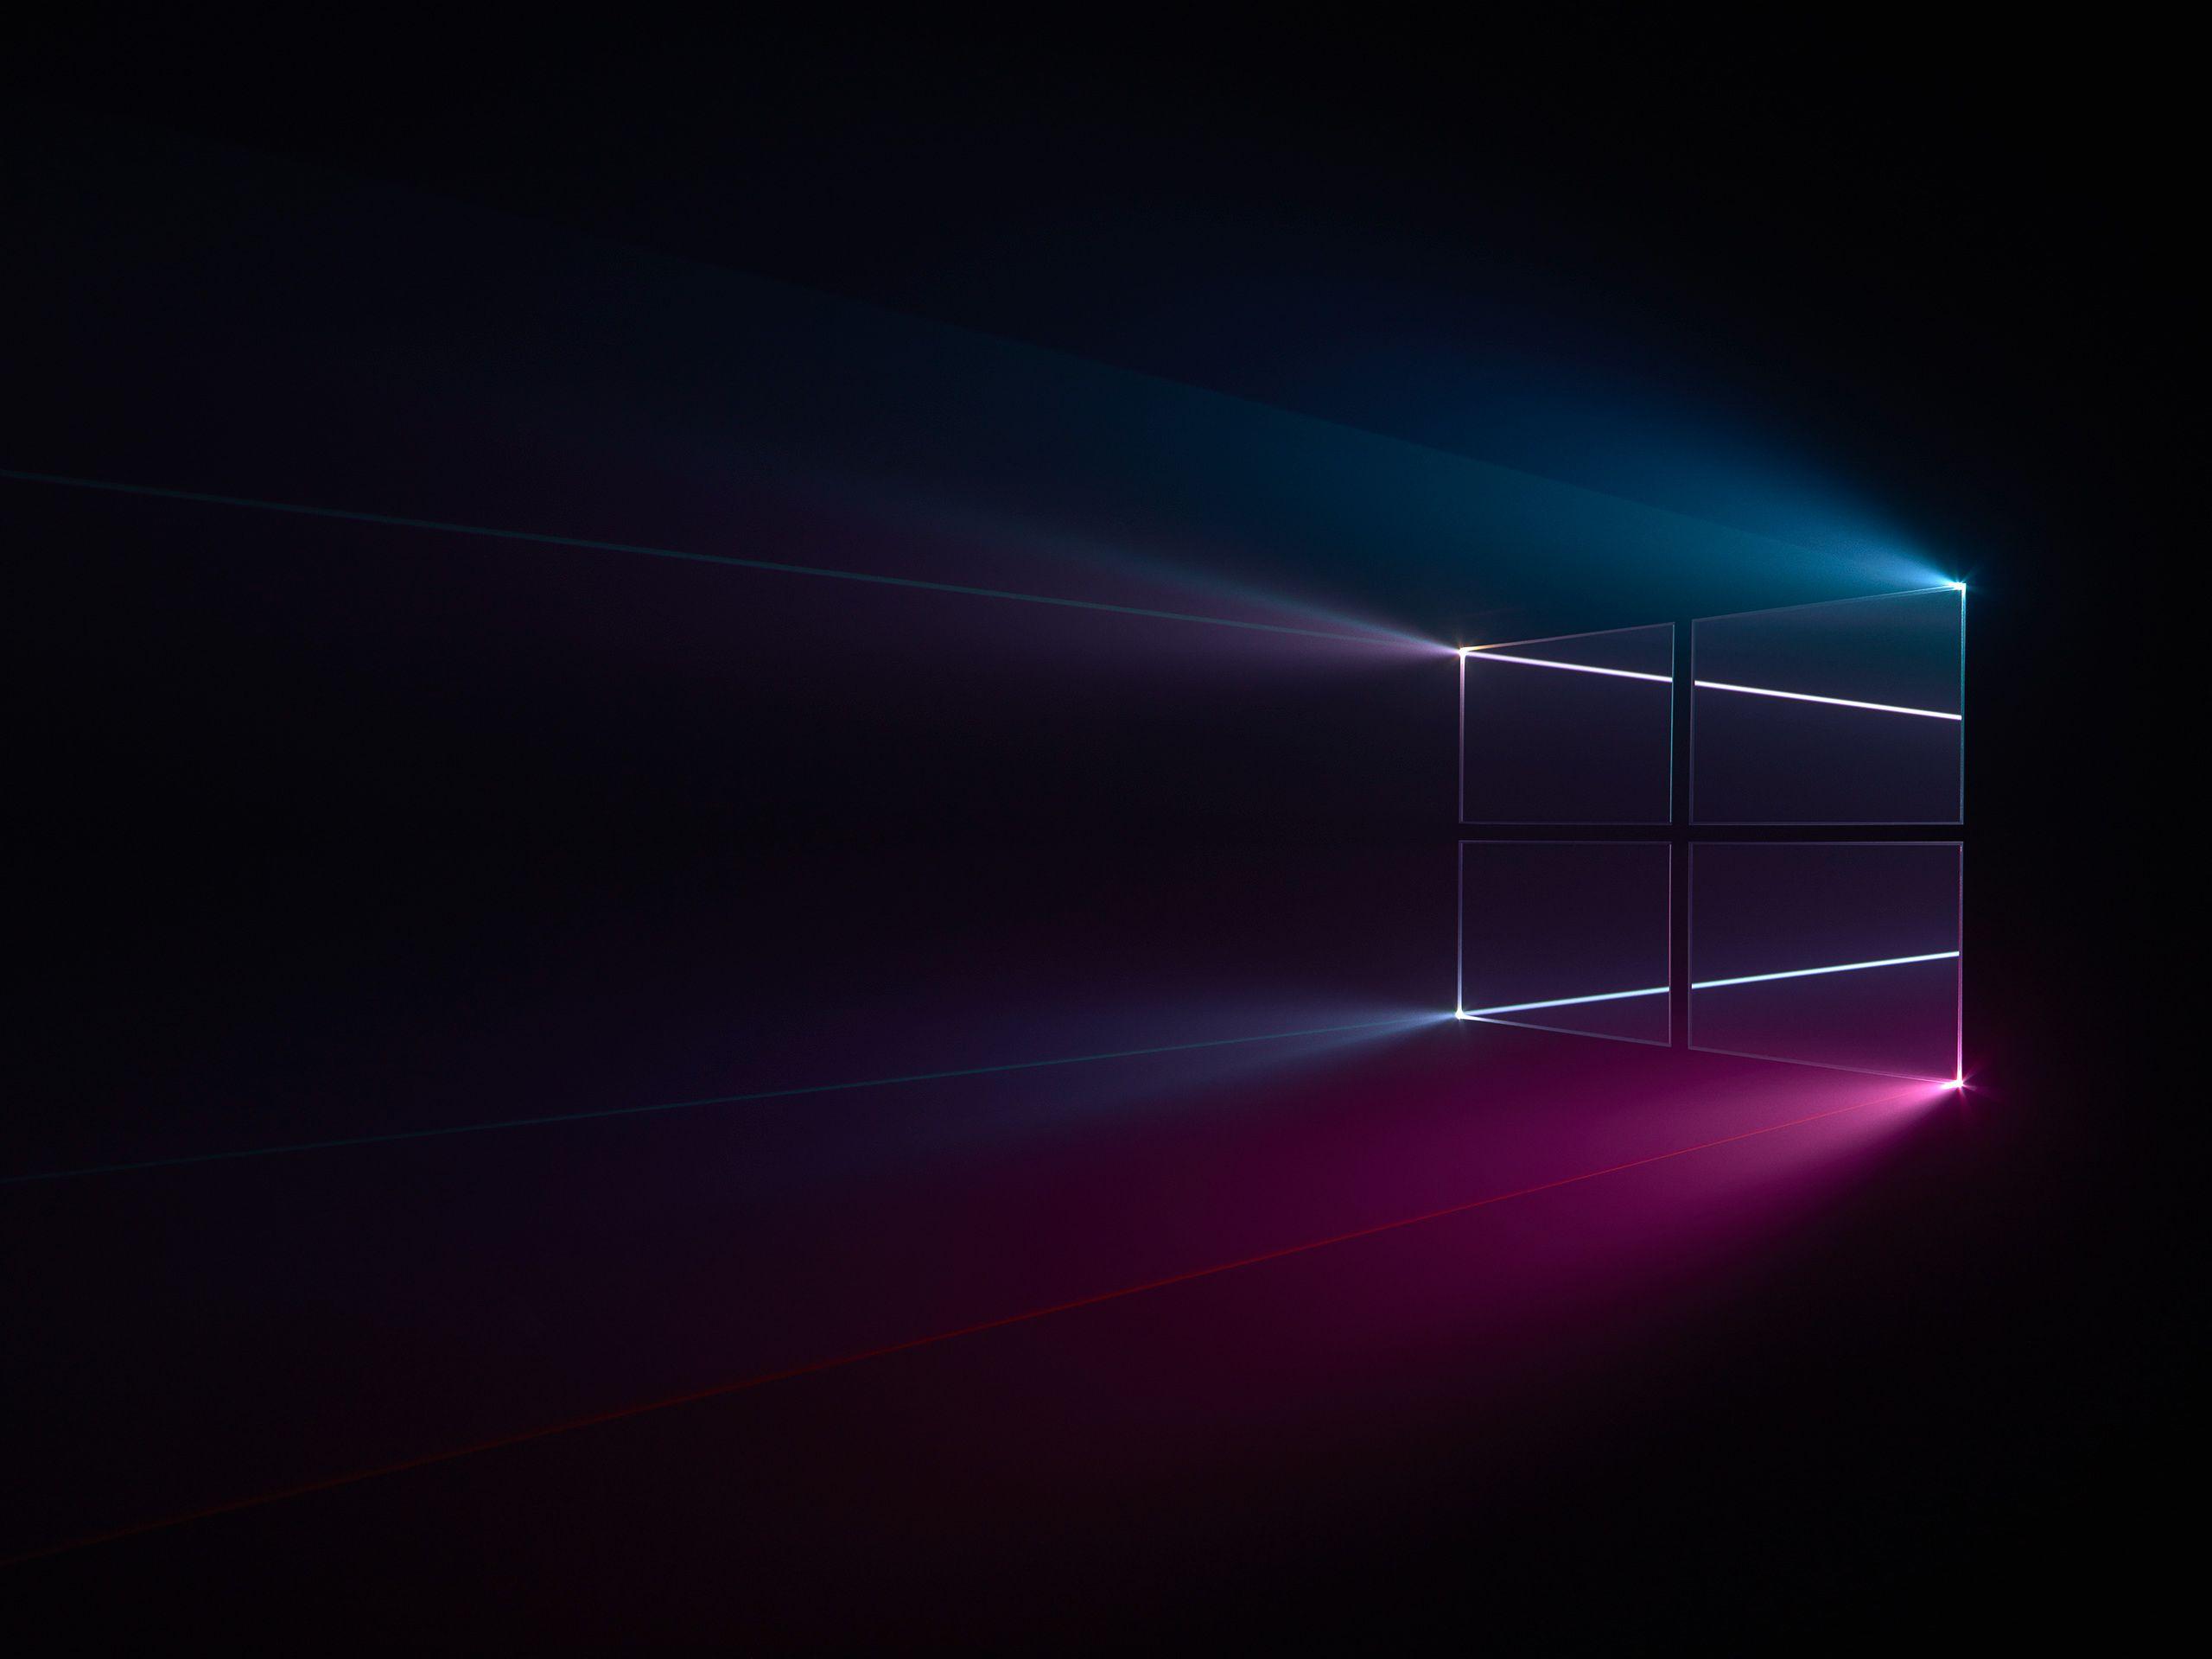 Dark Windows Logo - Wallpaper Windows 10, Windows logo, Blue, Pink, Dark, HD, Technology ...